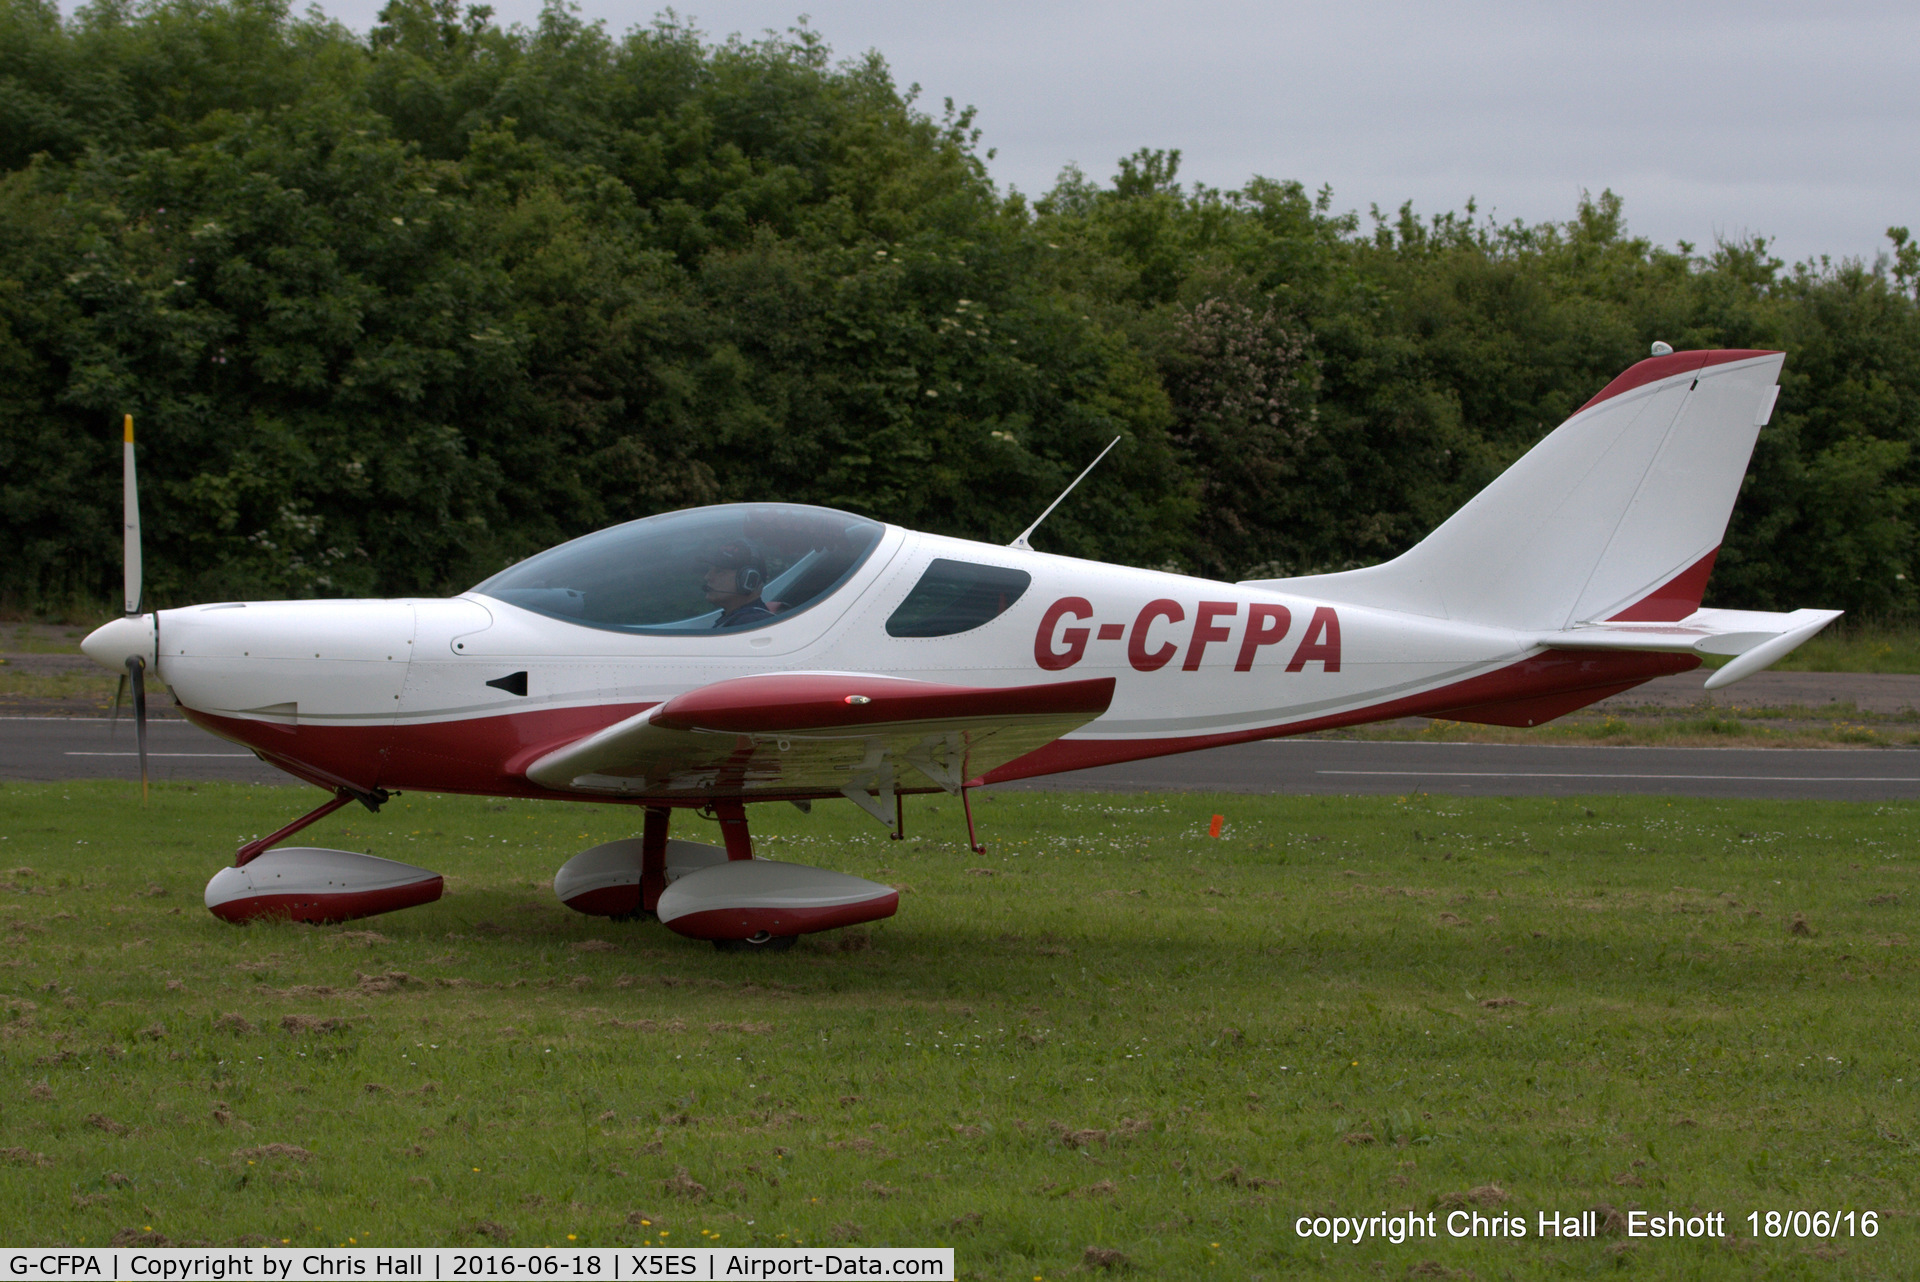 G-CFPA, 2008 CZAW SportCruiser C/N LAA 338-14869, at the Great North Fly in. Eshott